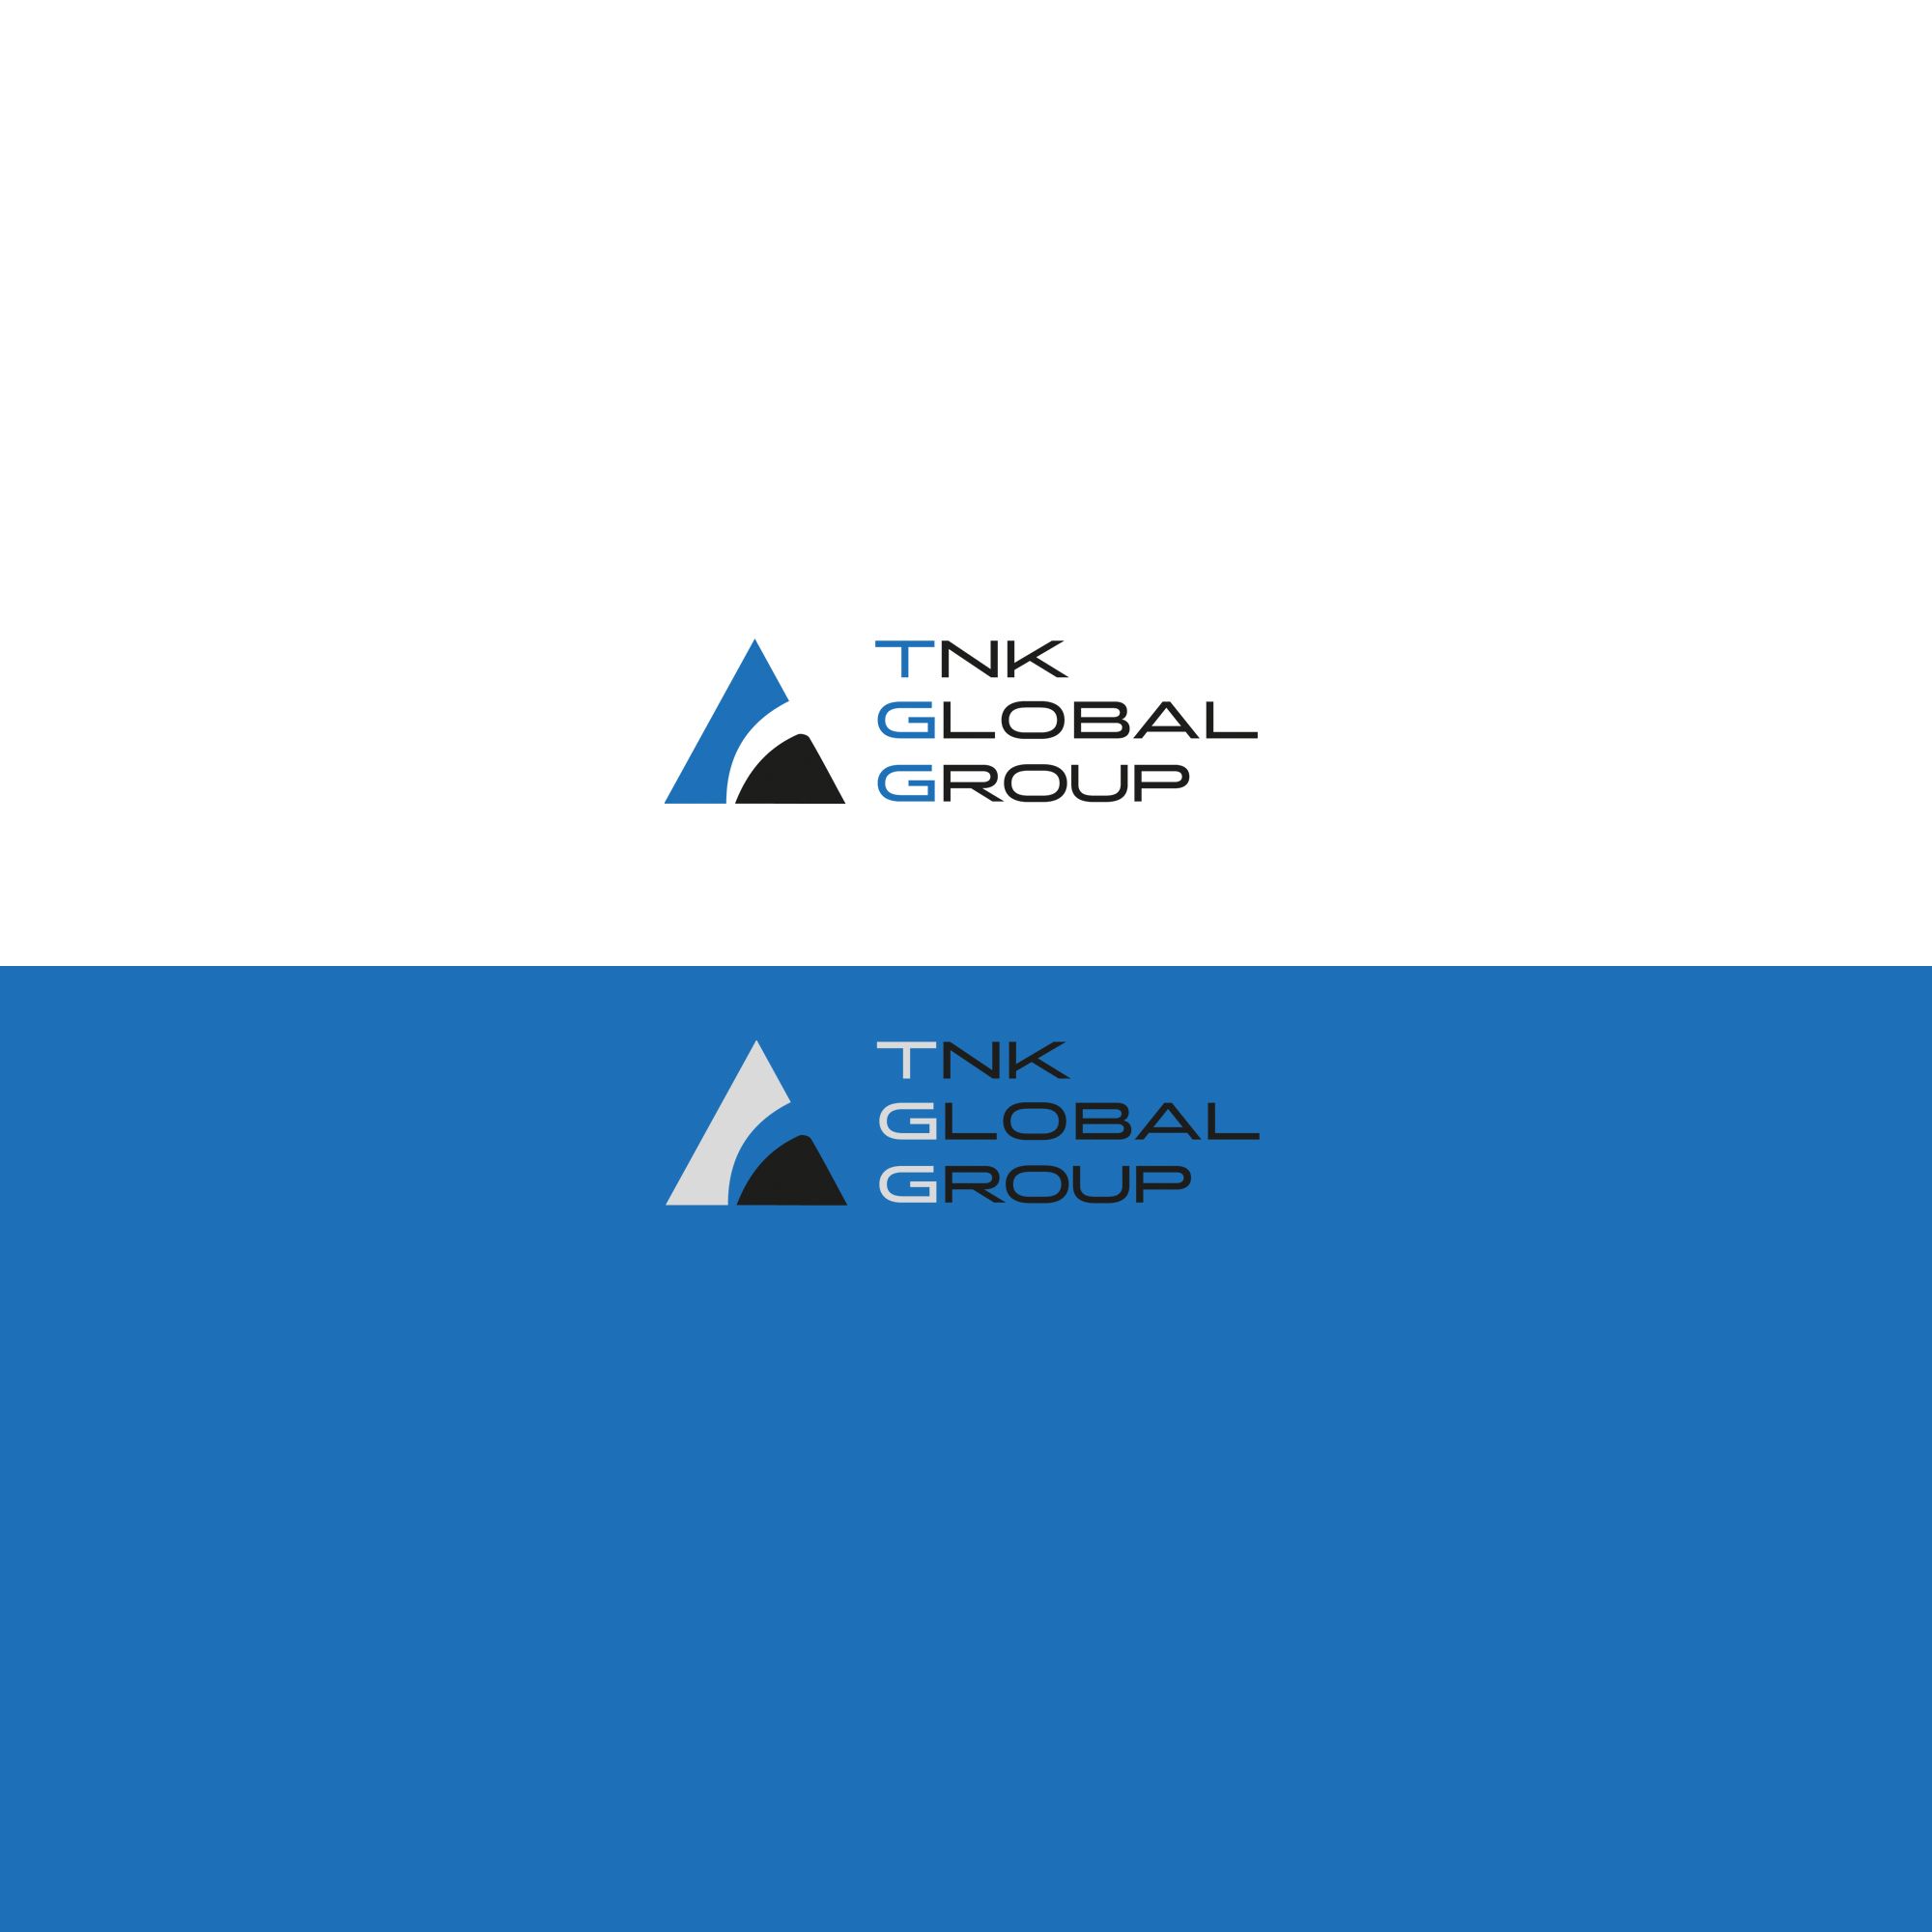 Логотип международной компании - TNK GLOBAL GROUP - дизайнер Gas-Min